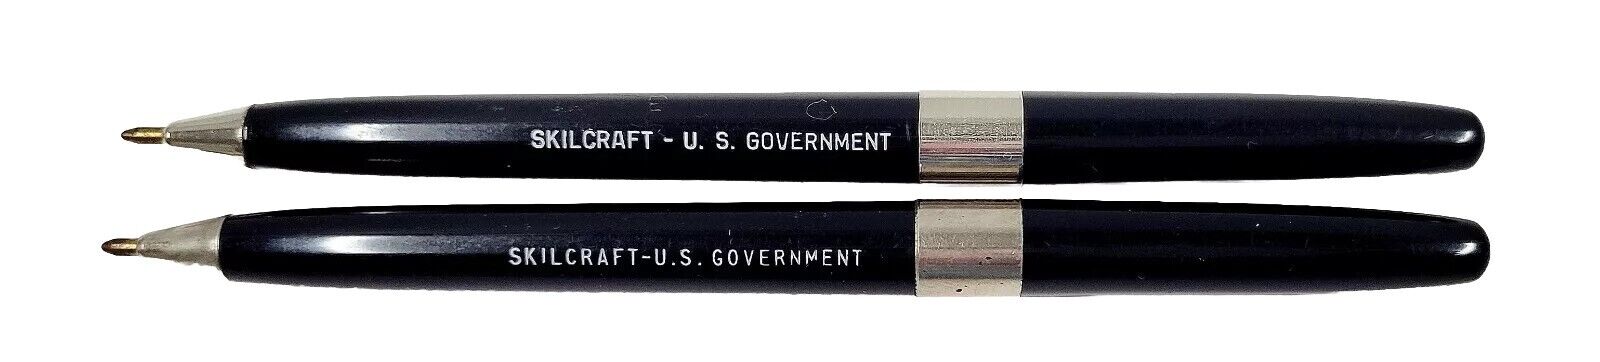 Vintage Skilcraft U.S. Government Ballpoint Pen Black/Chrome- Lot of 2